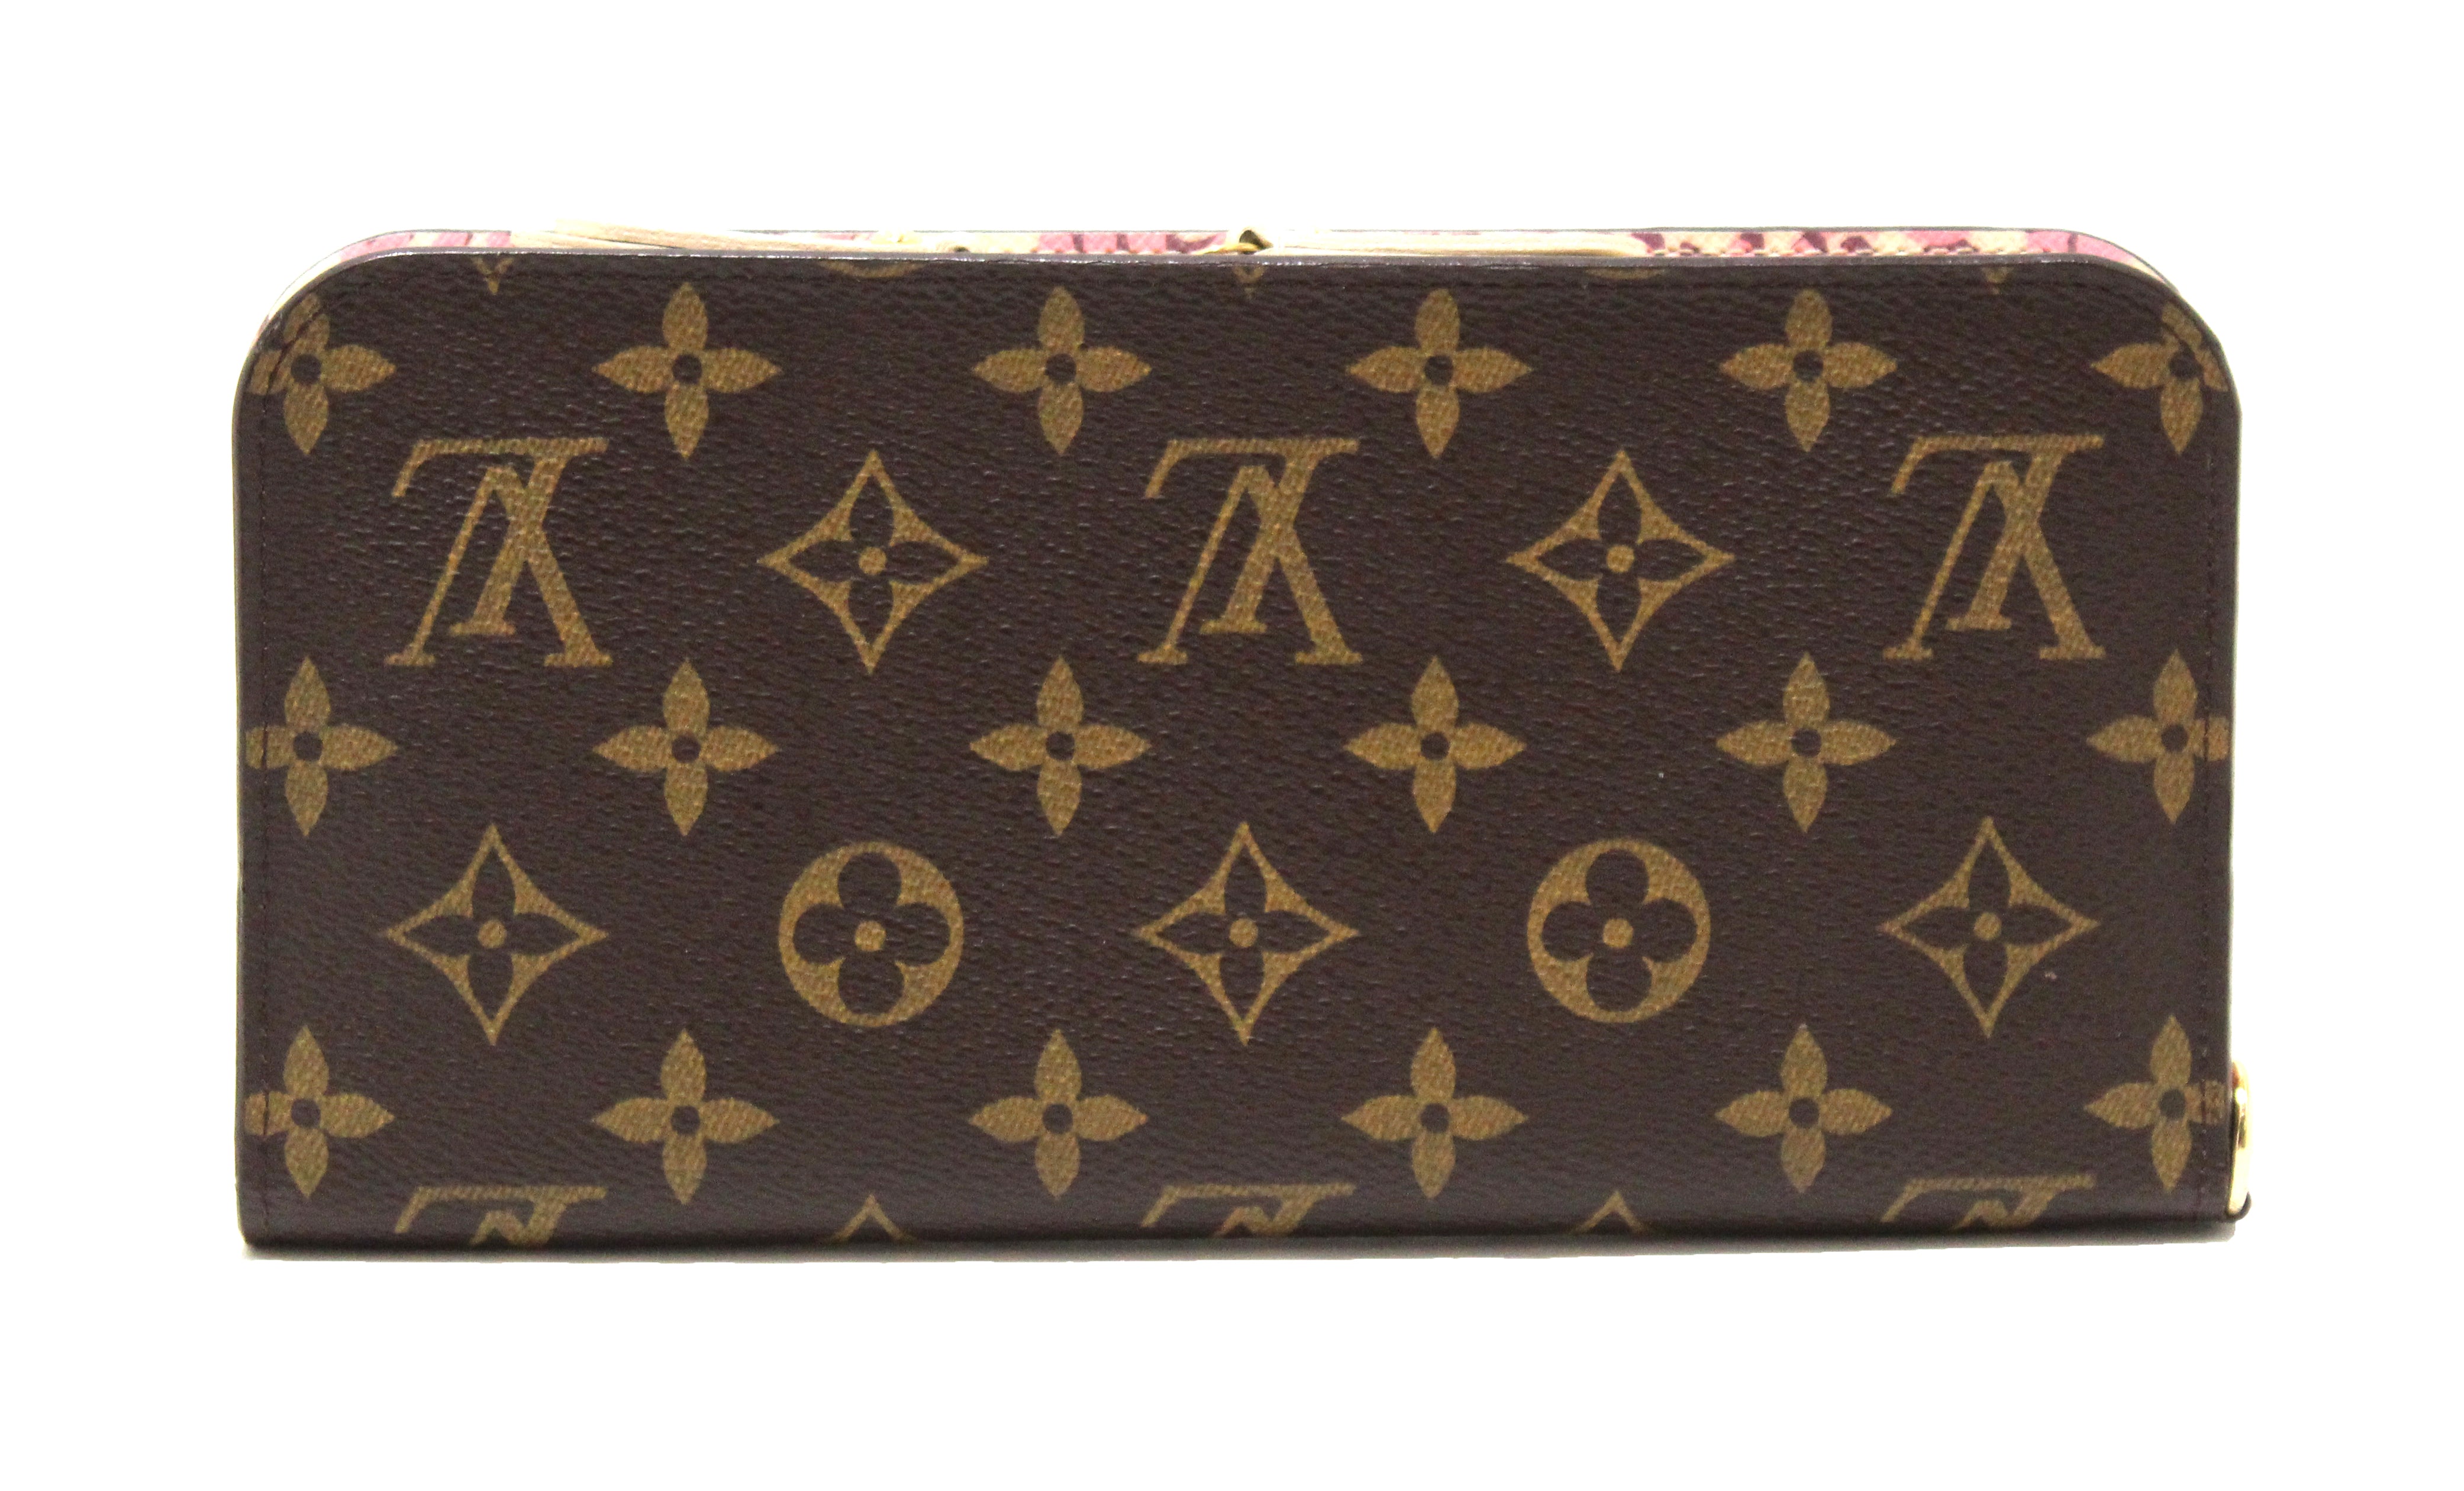 Authentic Louis Vuitton Limited Edition Monogram Canvas Stephen Sprouse Leopard Insolite Wallet